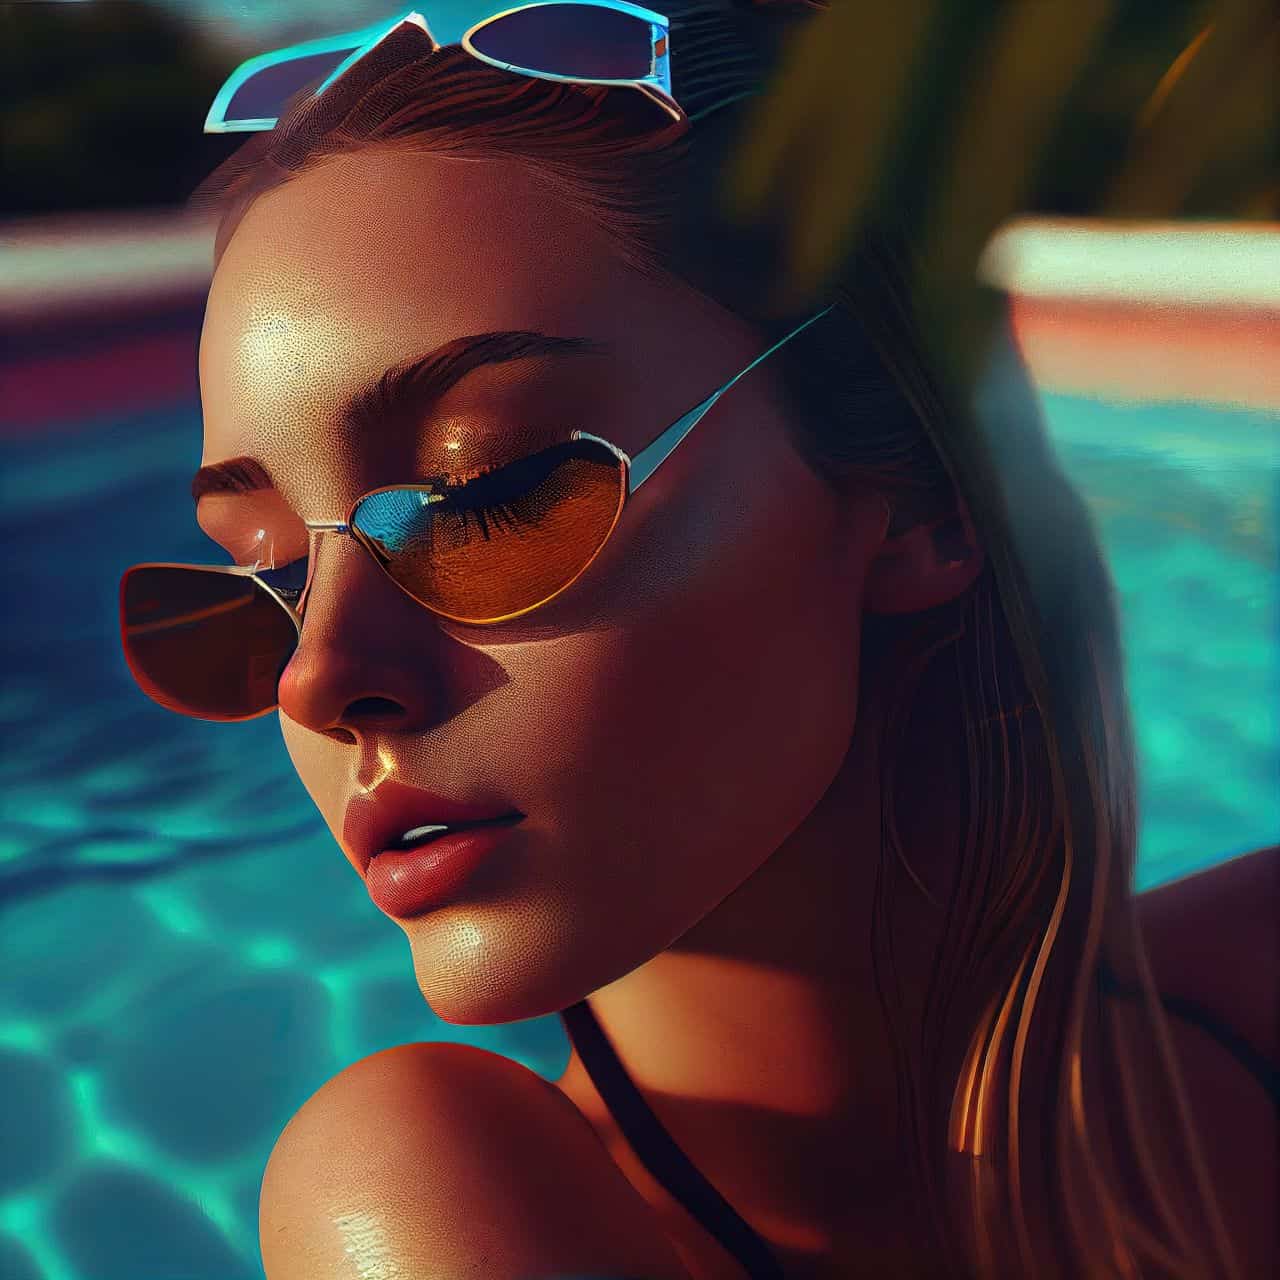 model in a pool wearing sunglasses